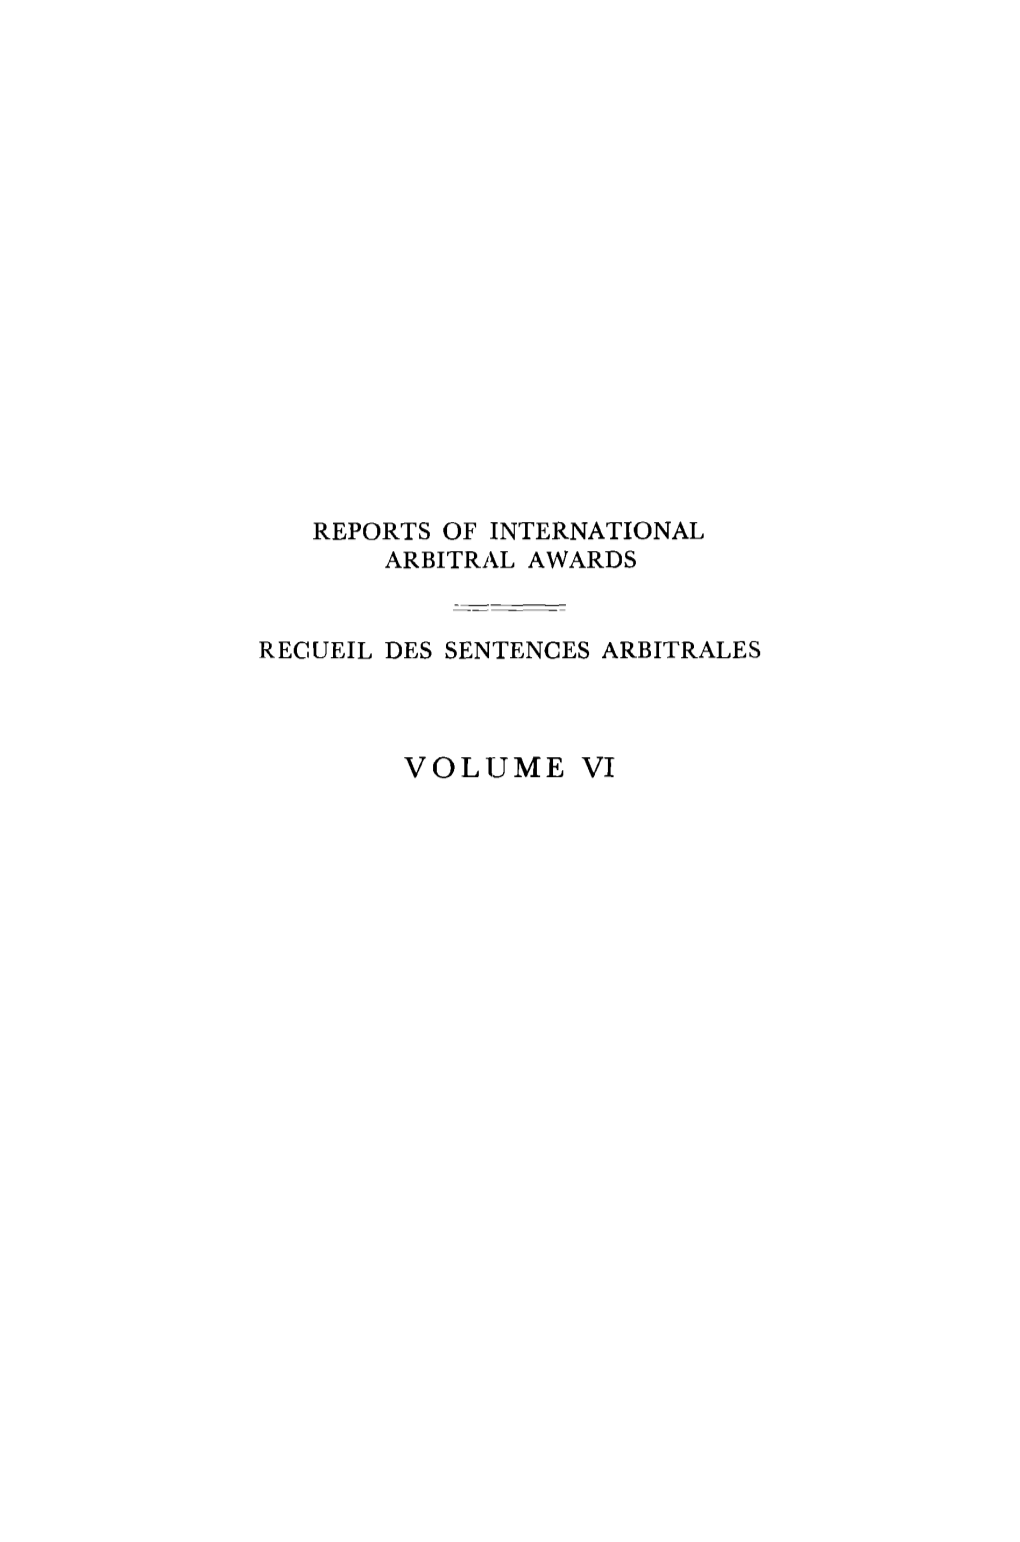 Volume VI — Reports of International Arbitral Awards